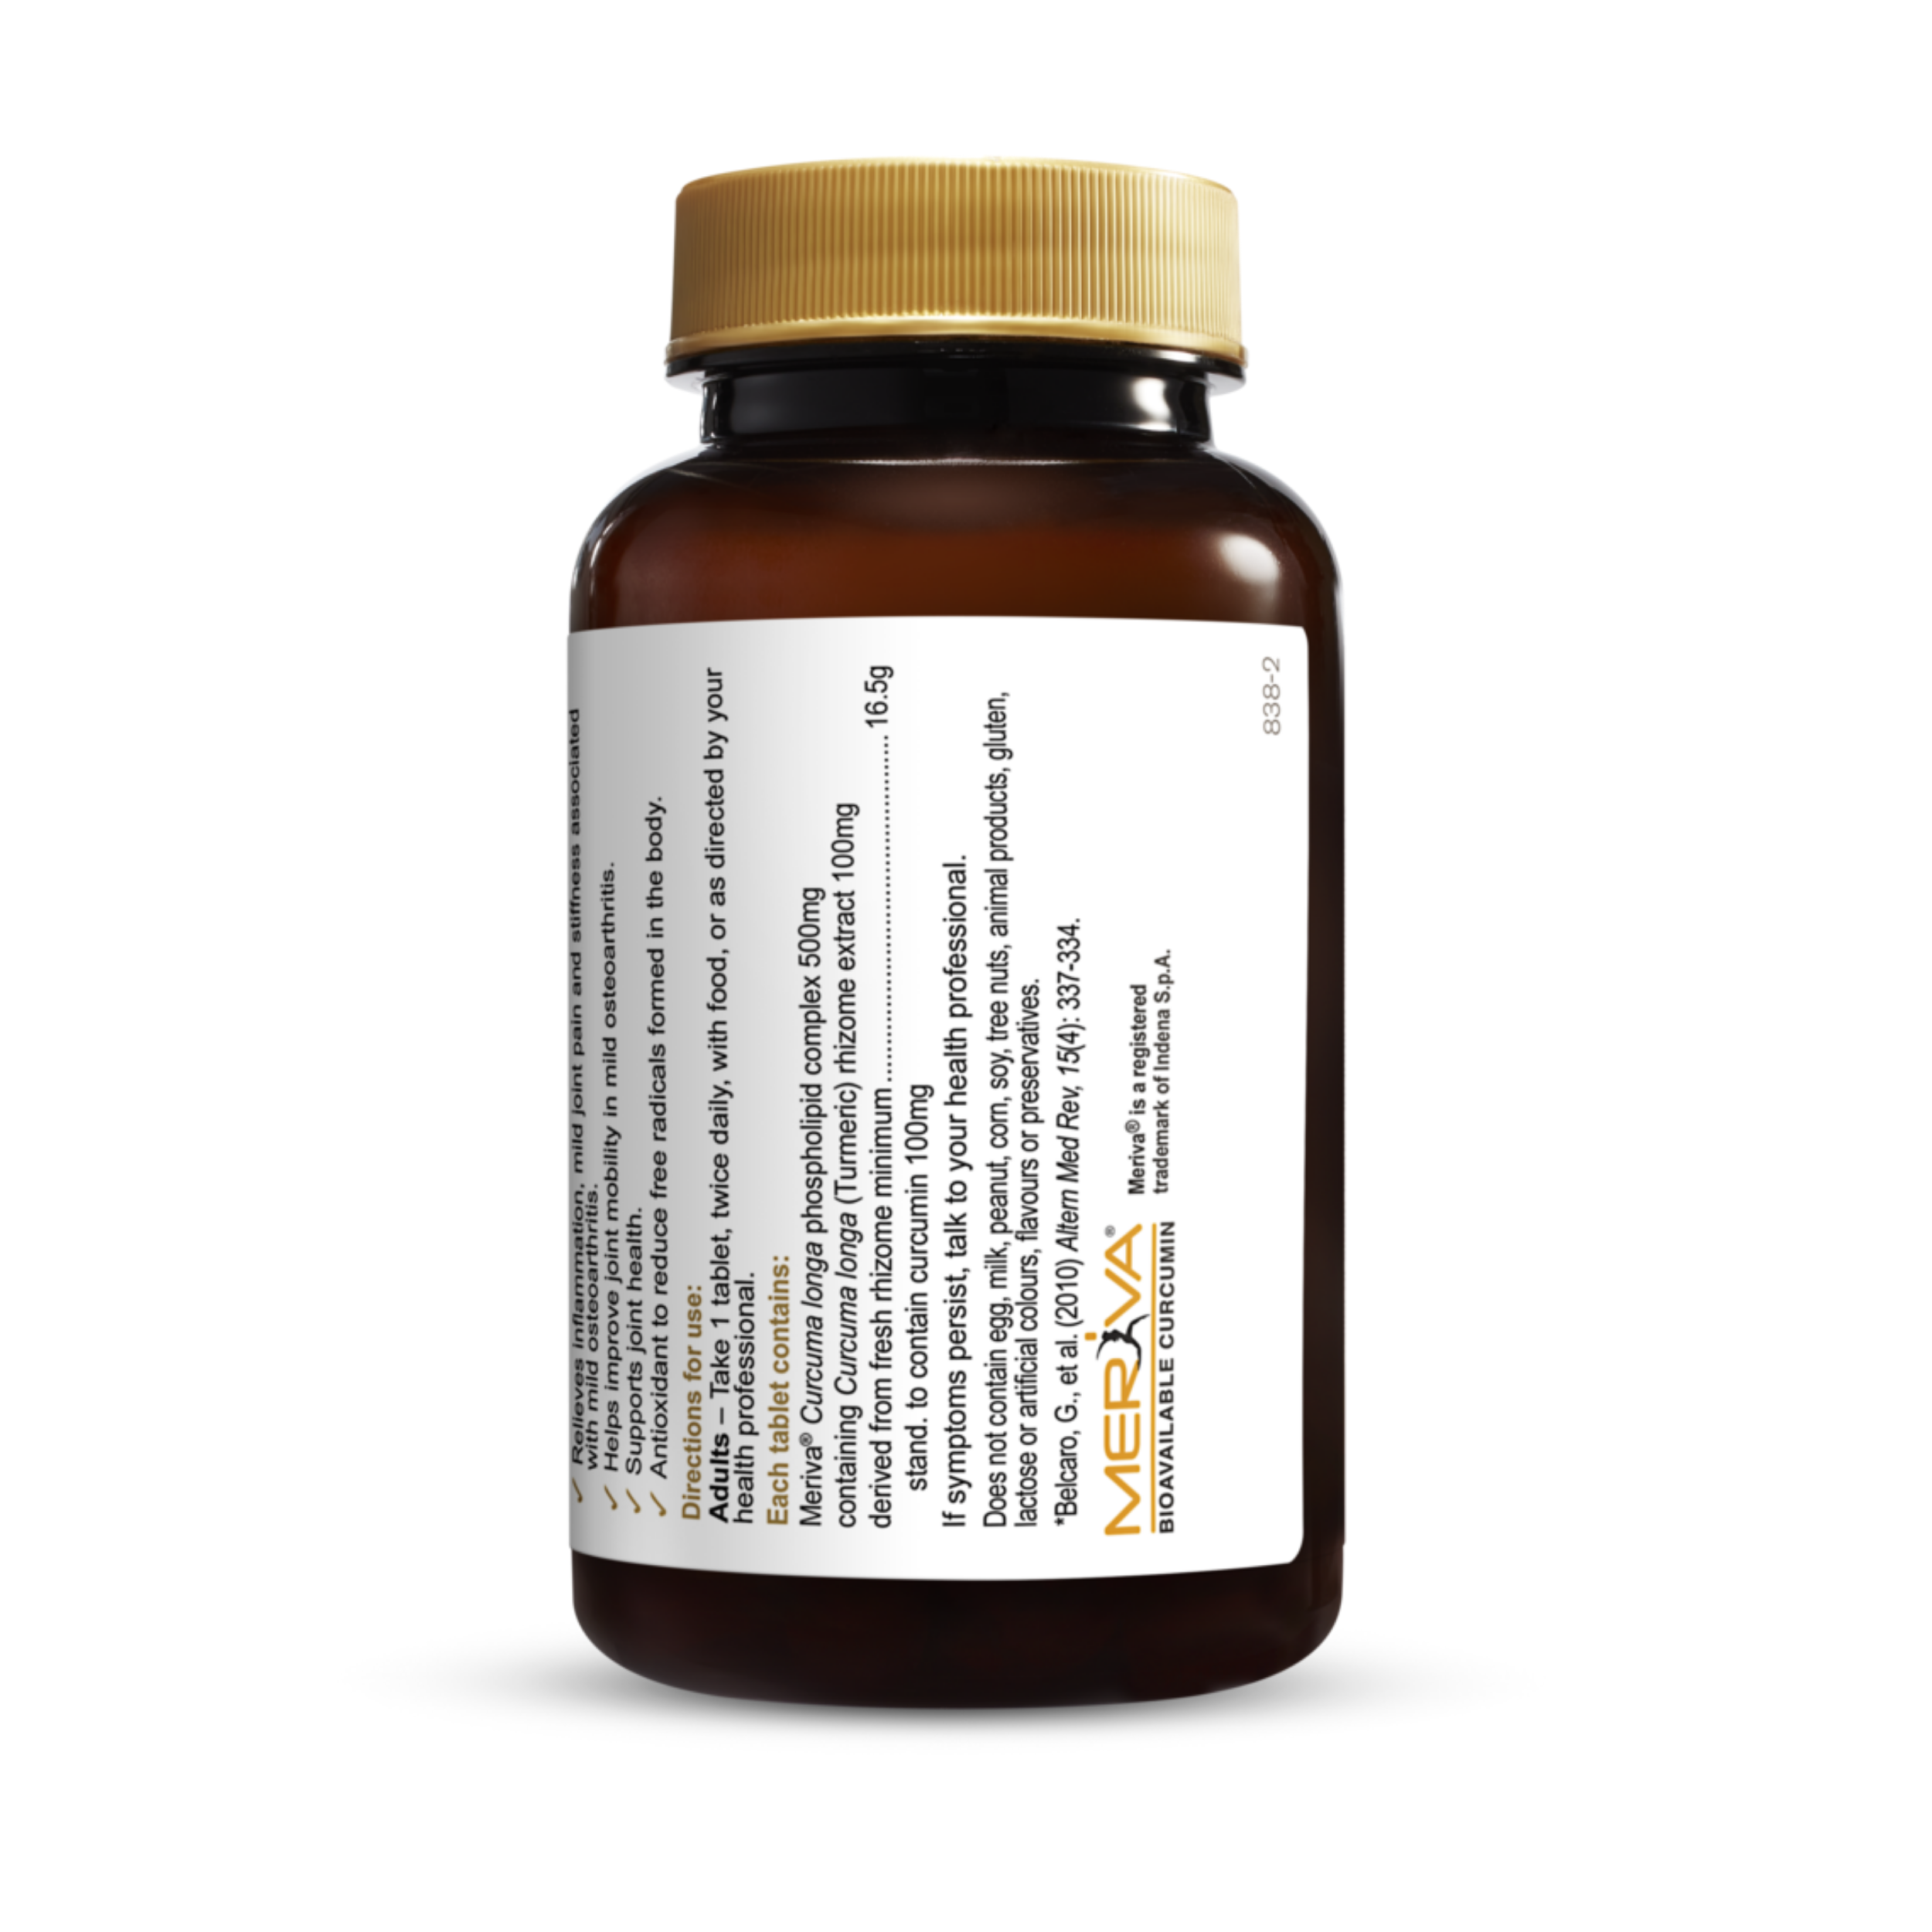 Copy of Herbs of Gold Bio Curcumin 5400 30 Tablets